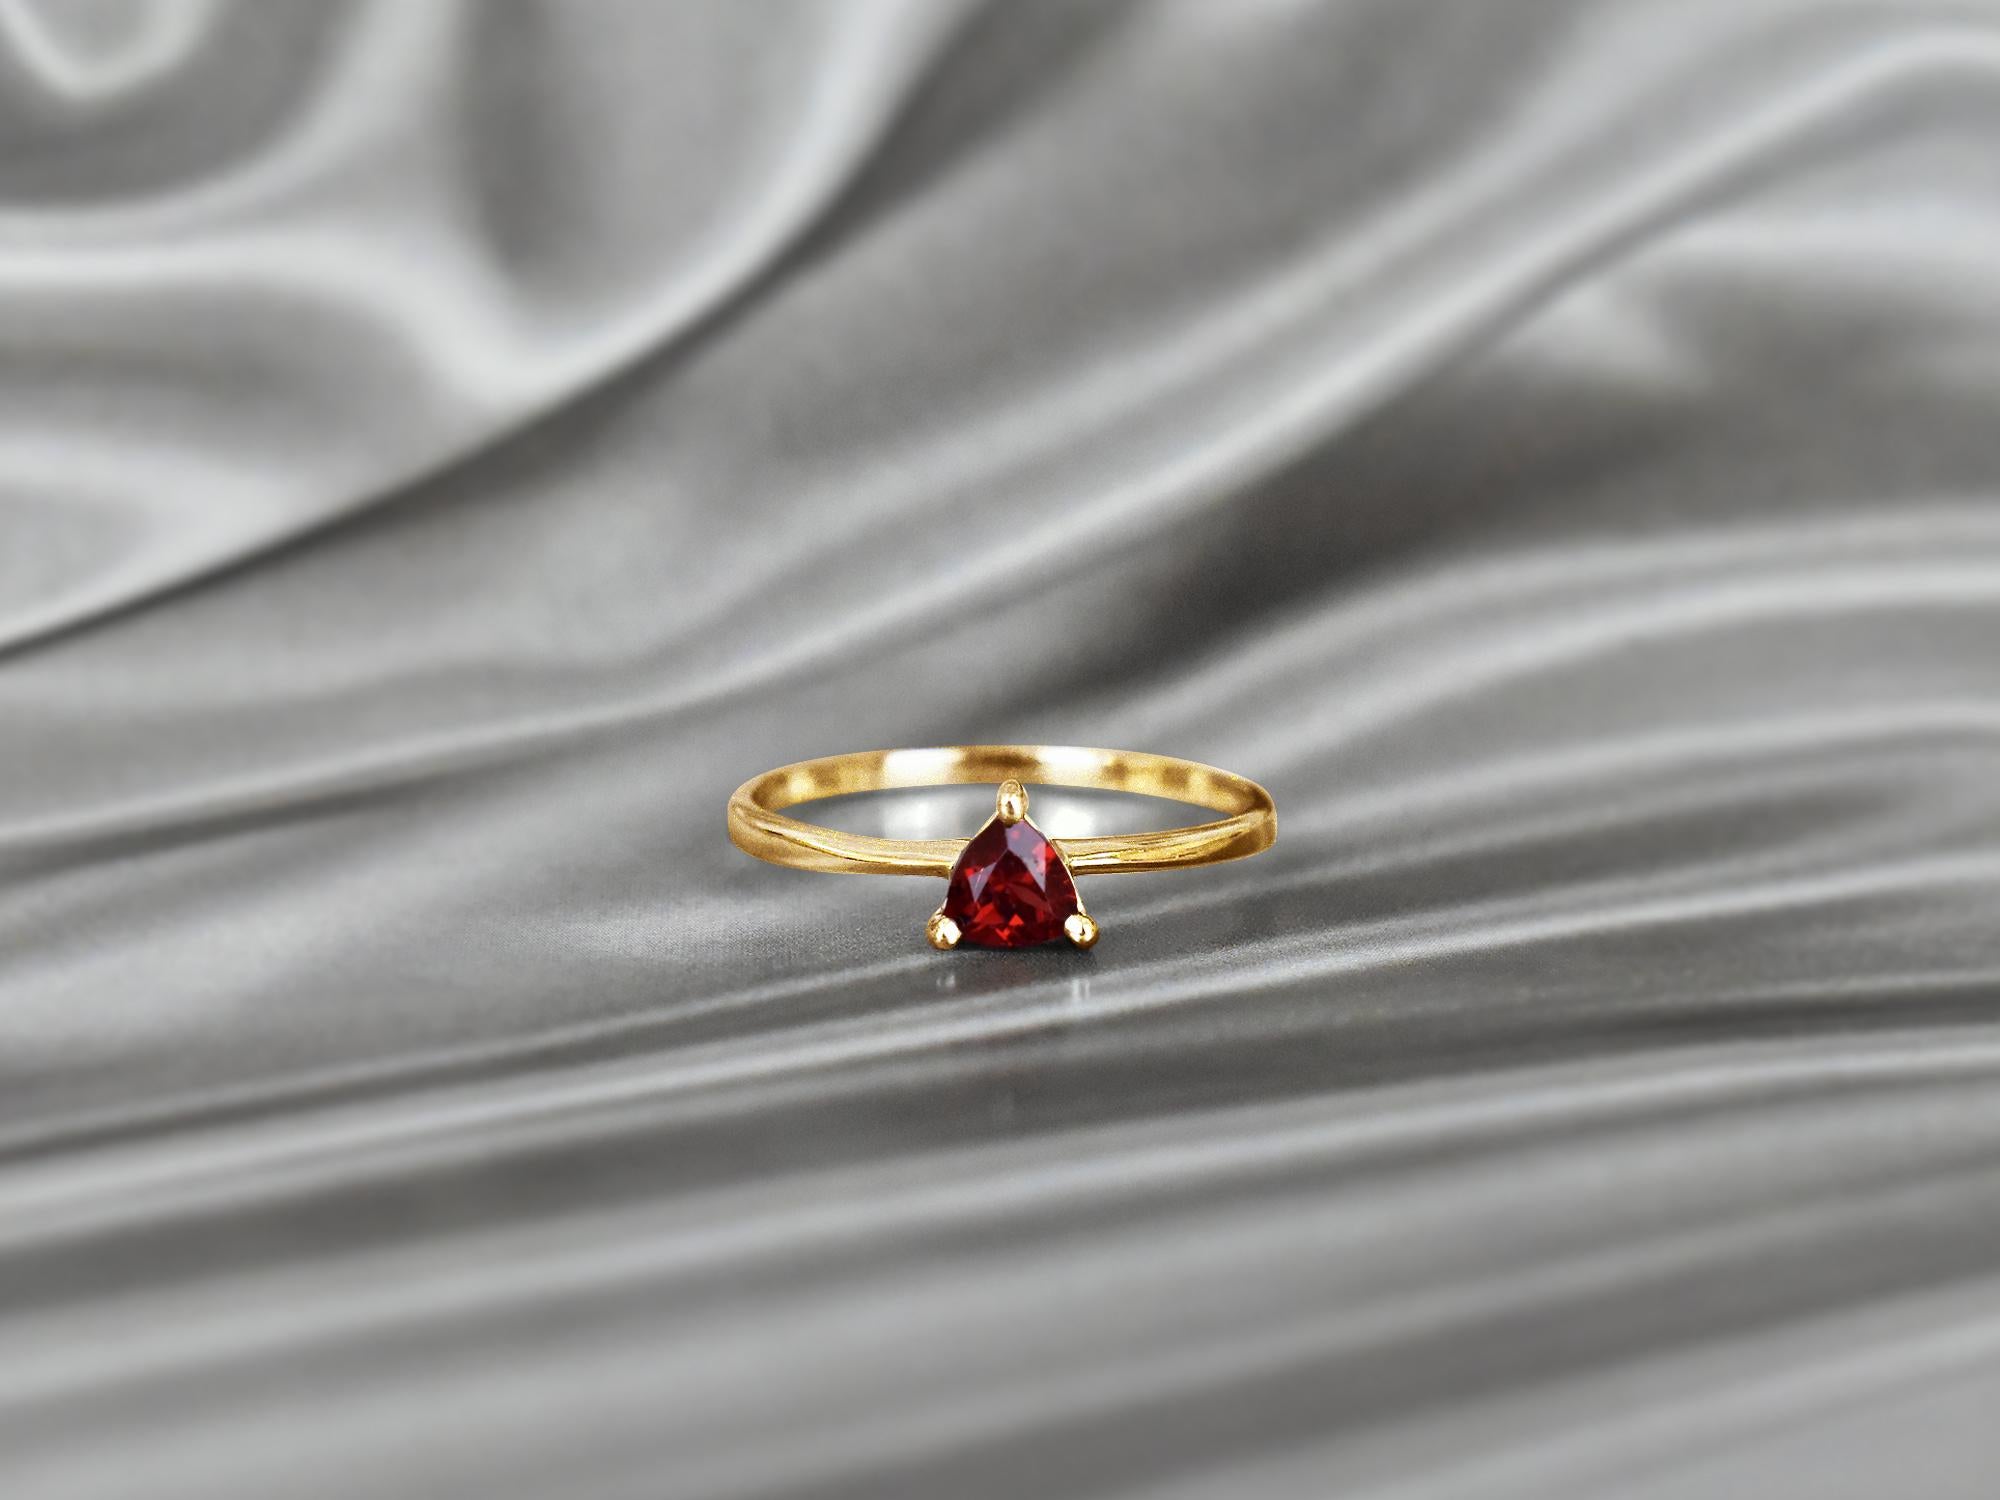 For Sale:  14k Gold Trillion Gemstone 6 mm Trillion Gemstone Engagement Ring Stackable Ring 3